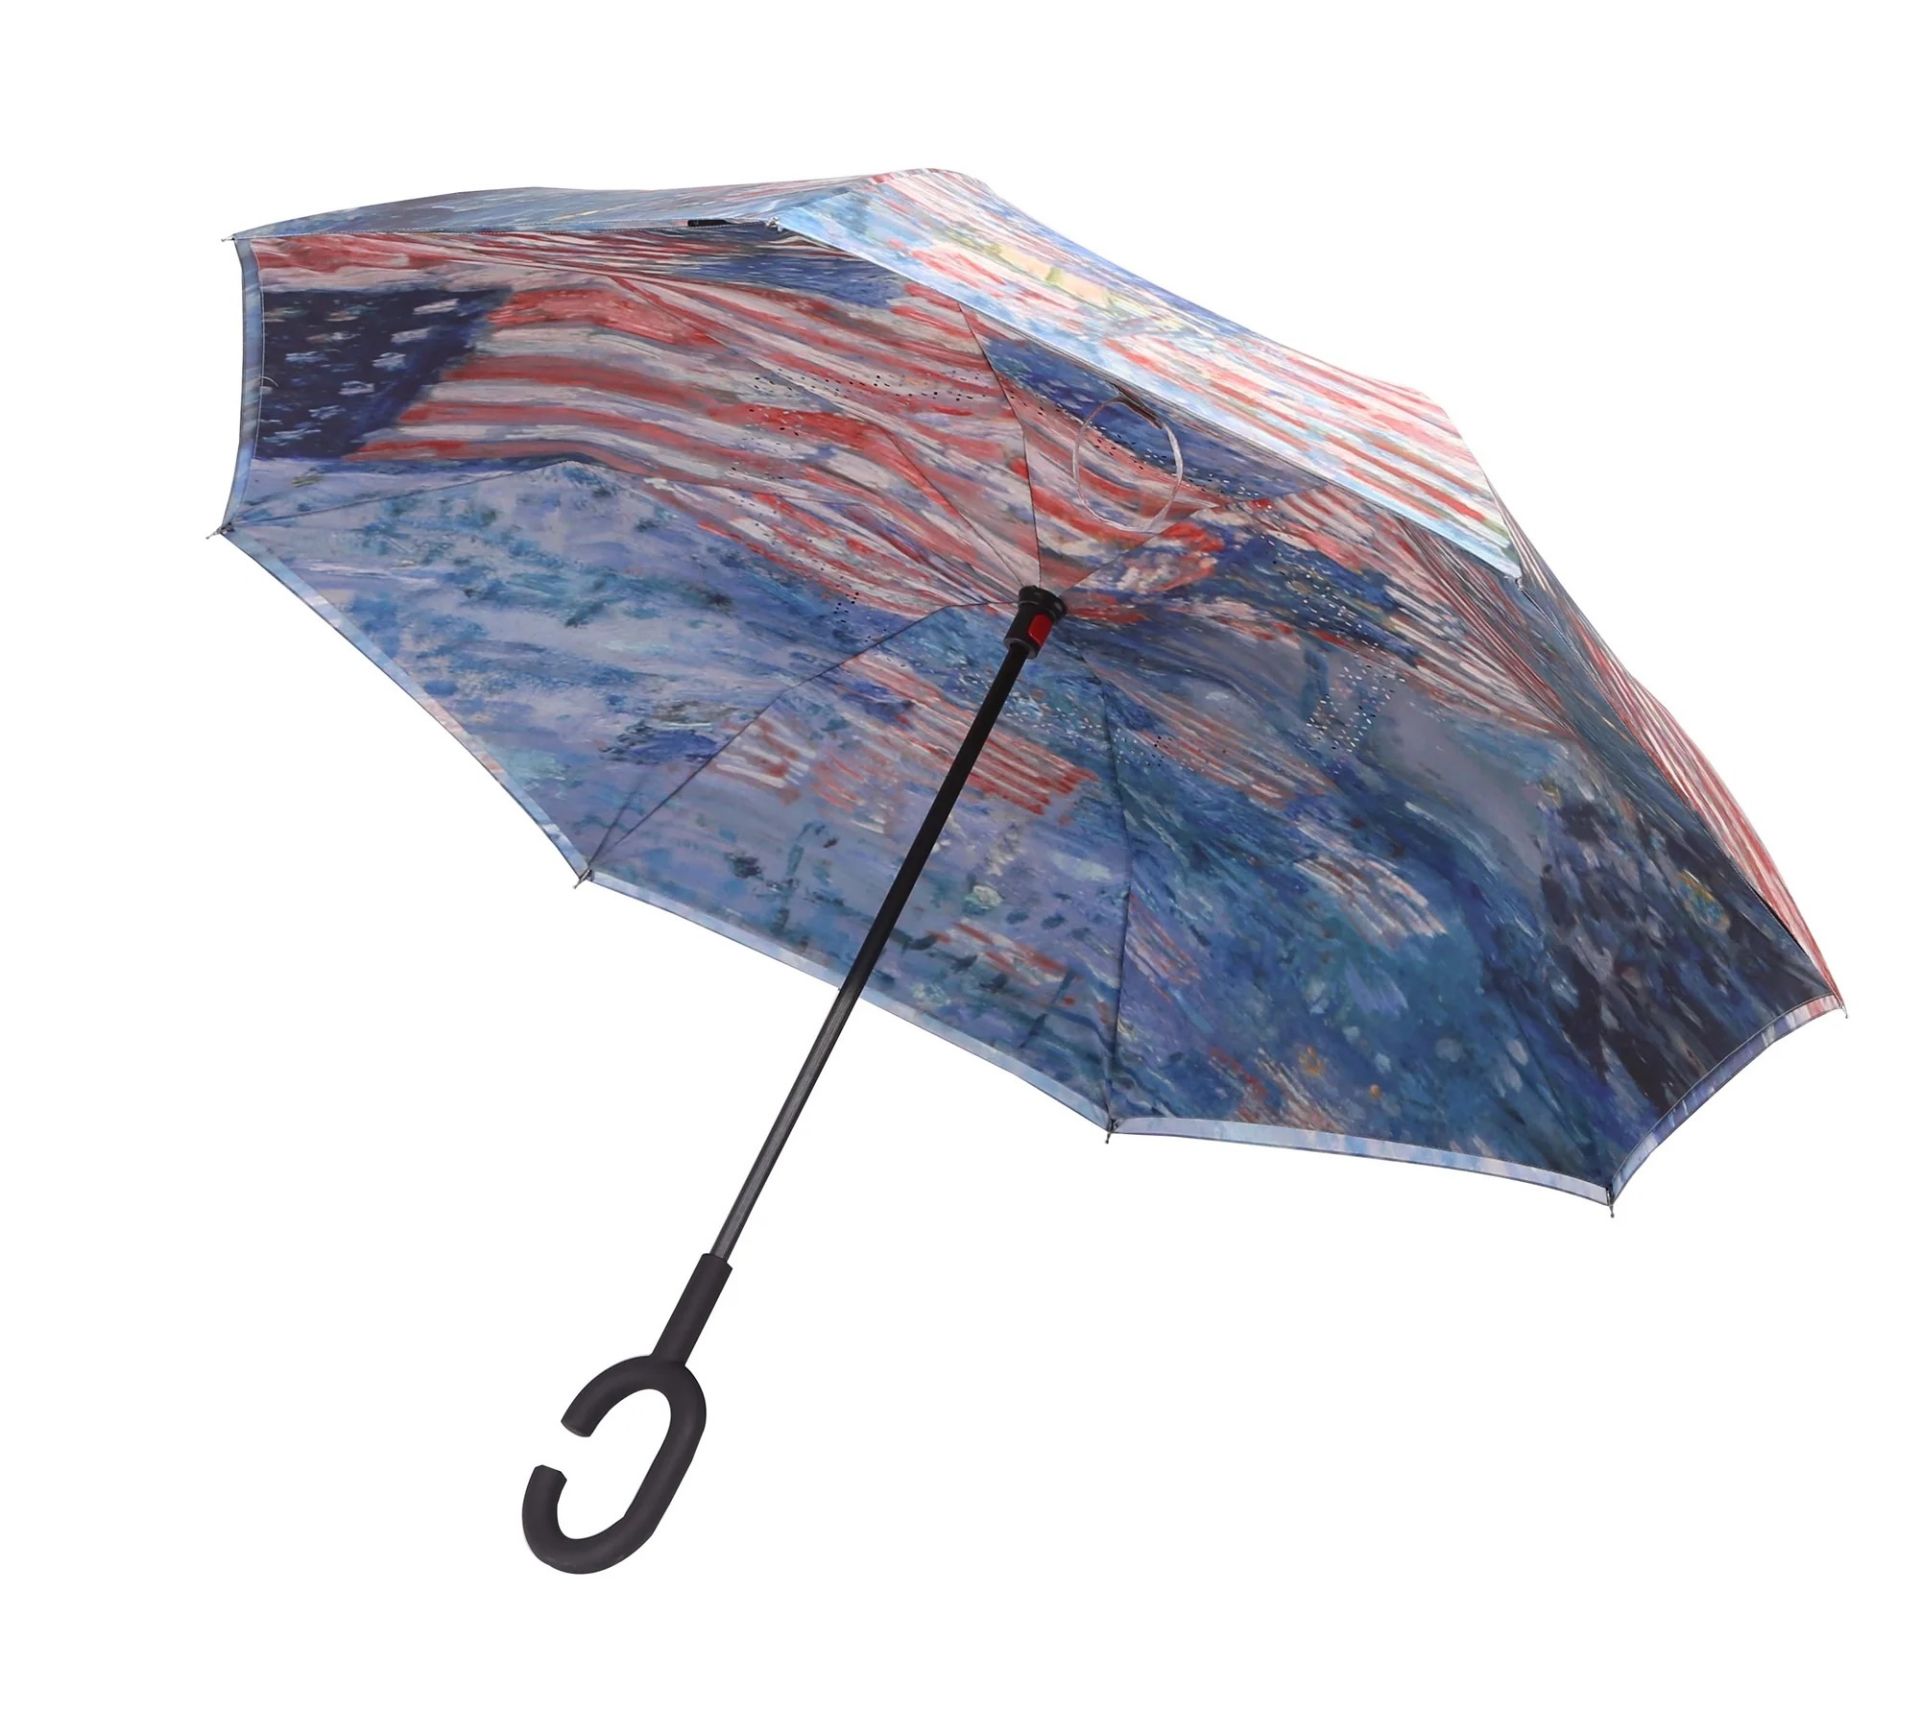 Childe Hassam "The Avenue in the Rain" Umbrella